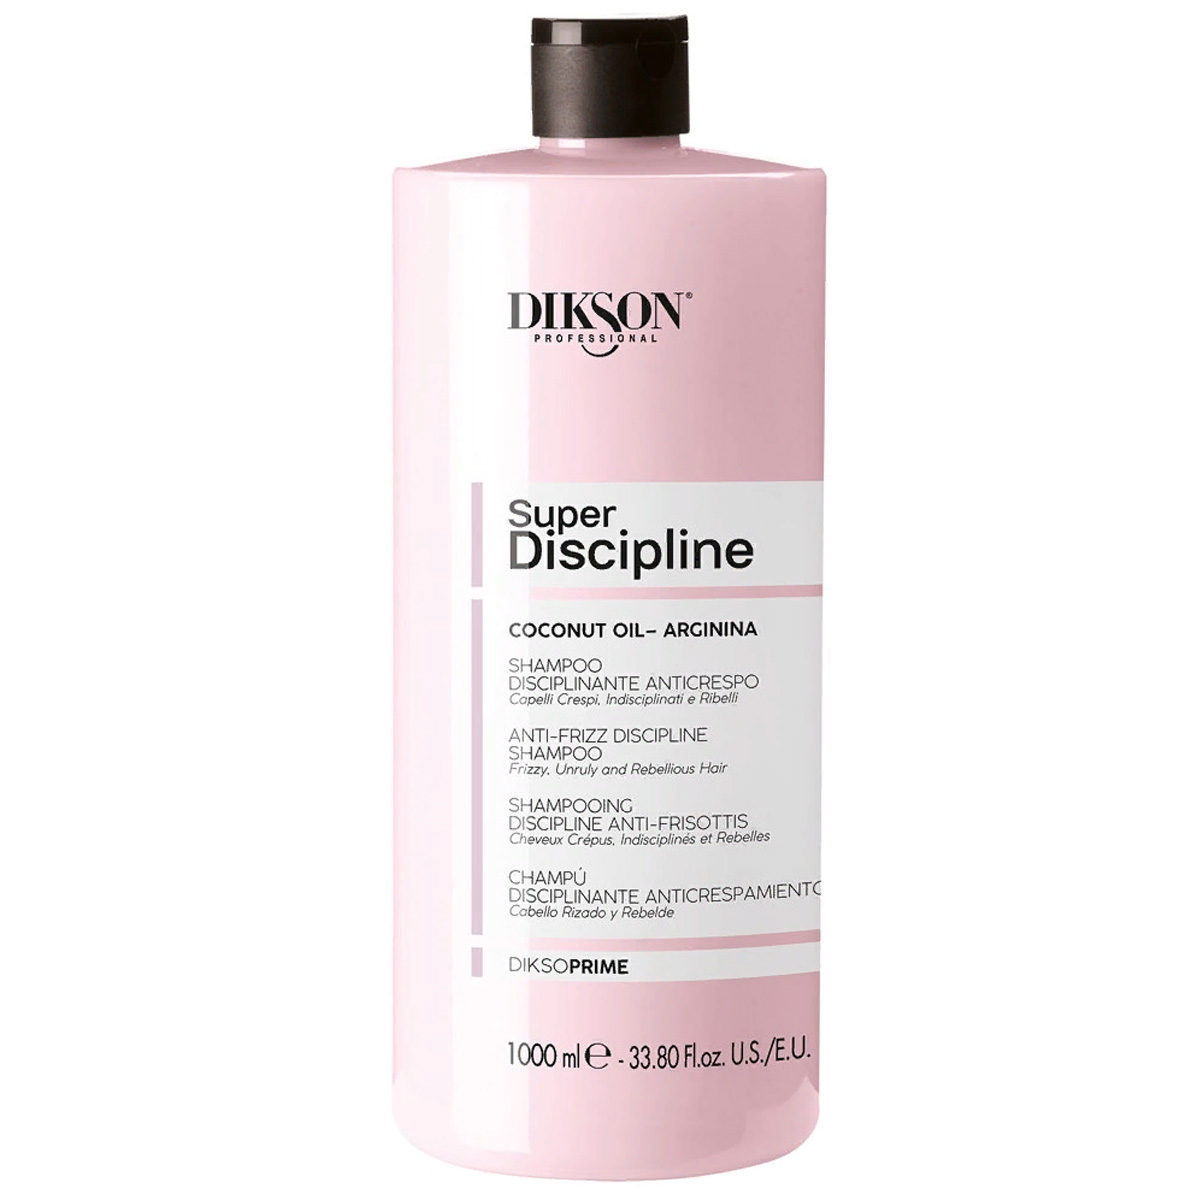 цена Dikson Шампунь с кокосовым маслом для пушистых волос Shampoo Anti-frizz Discipline, 1000 мл (Dikson, DiksoPrime)